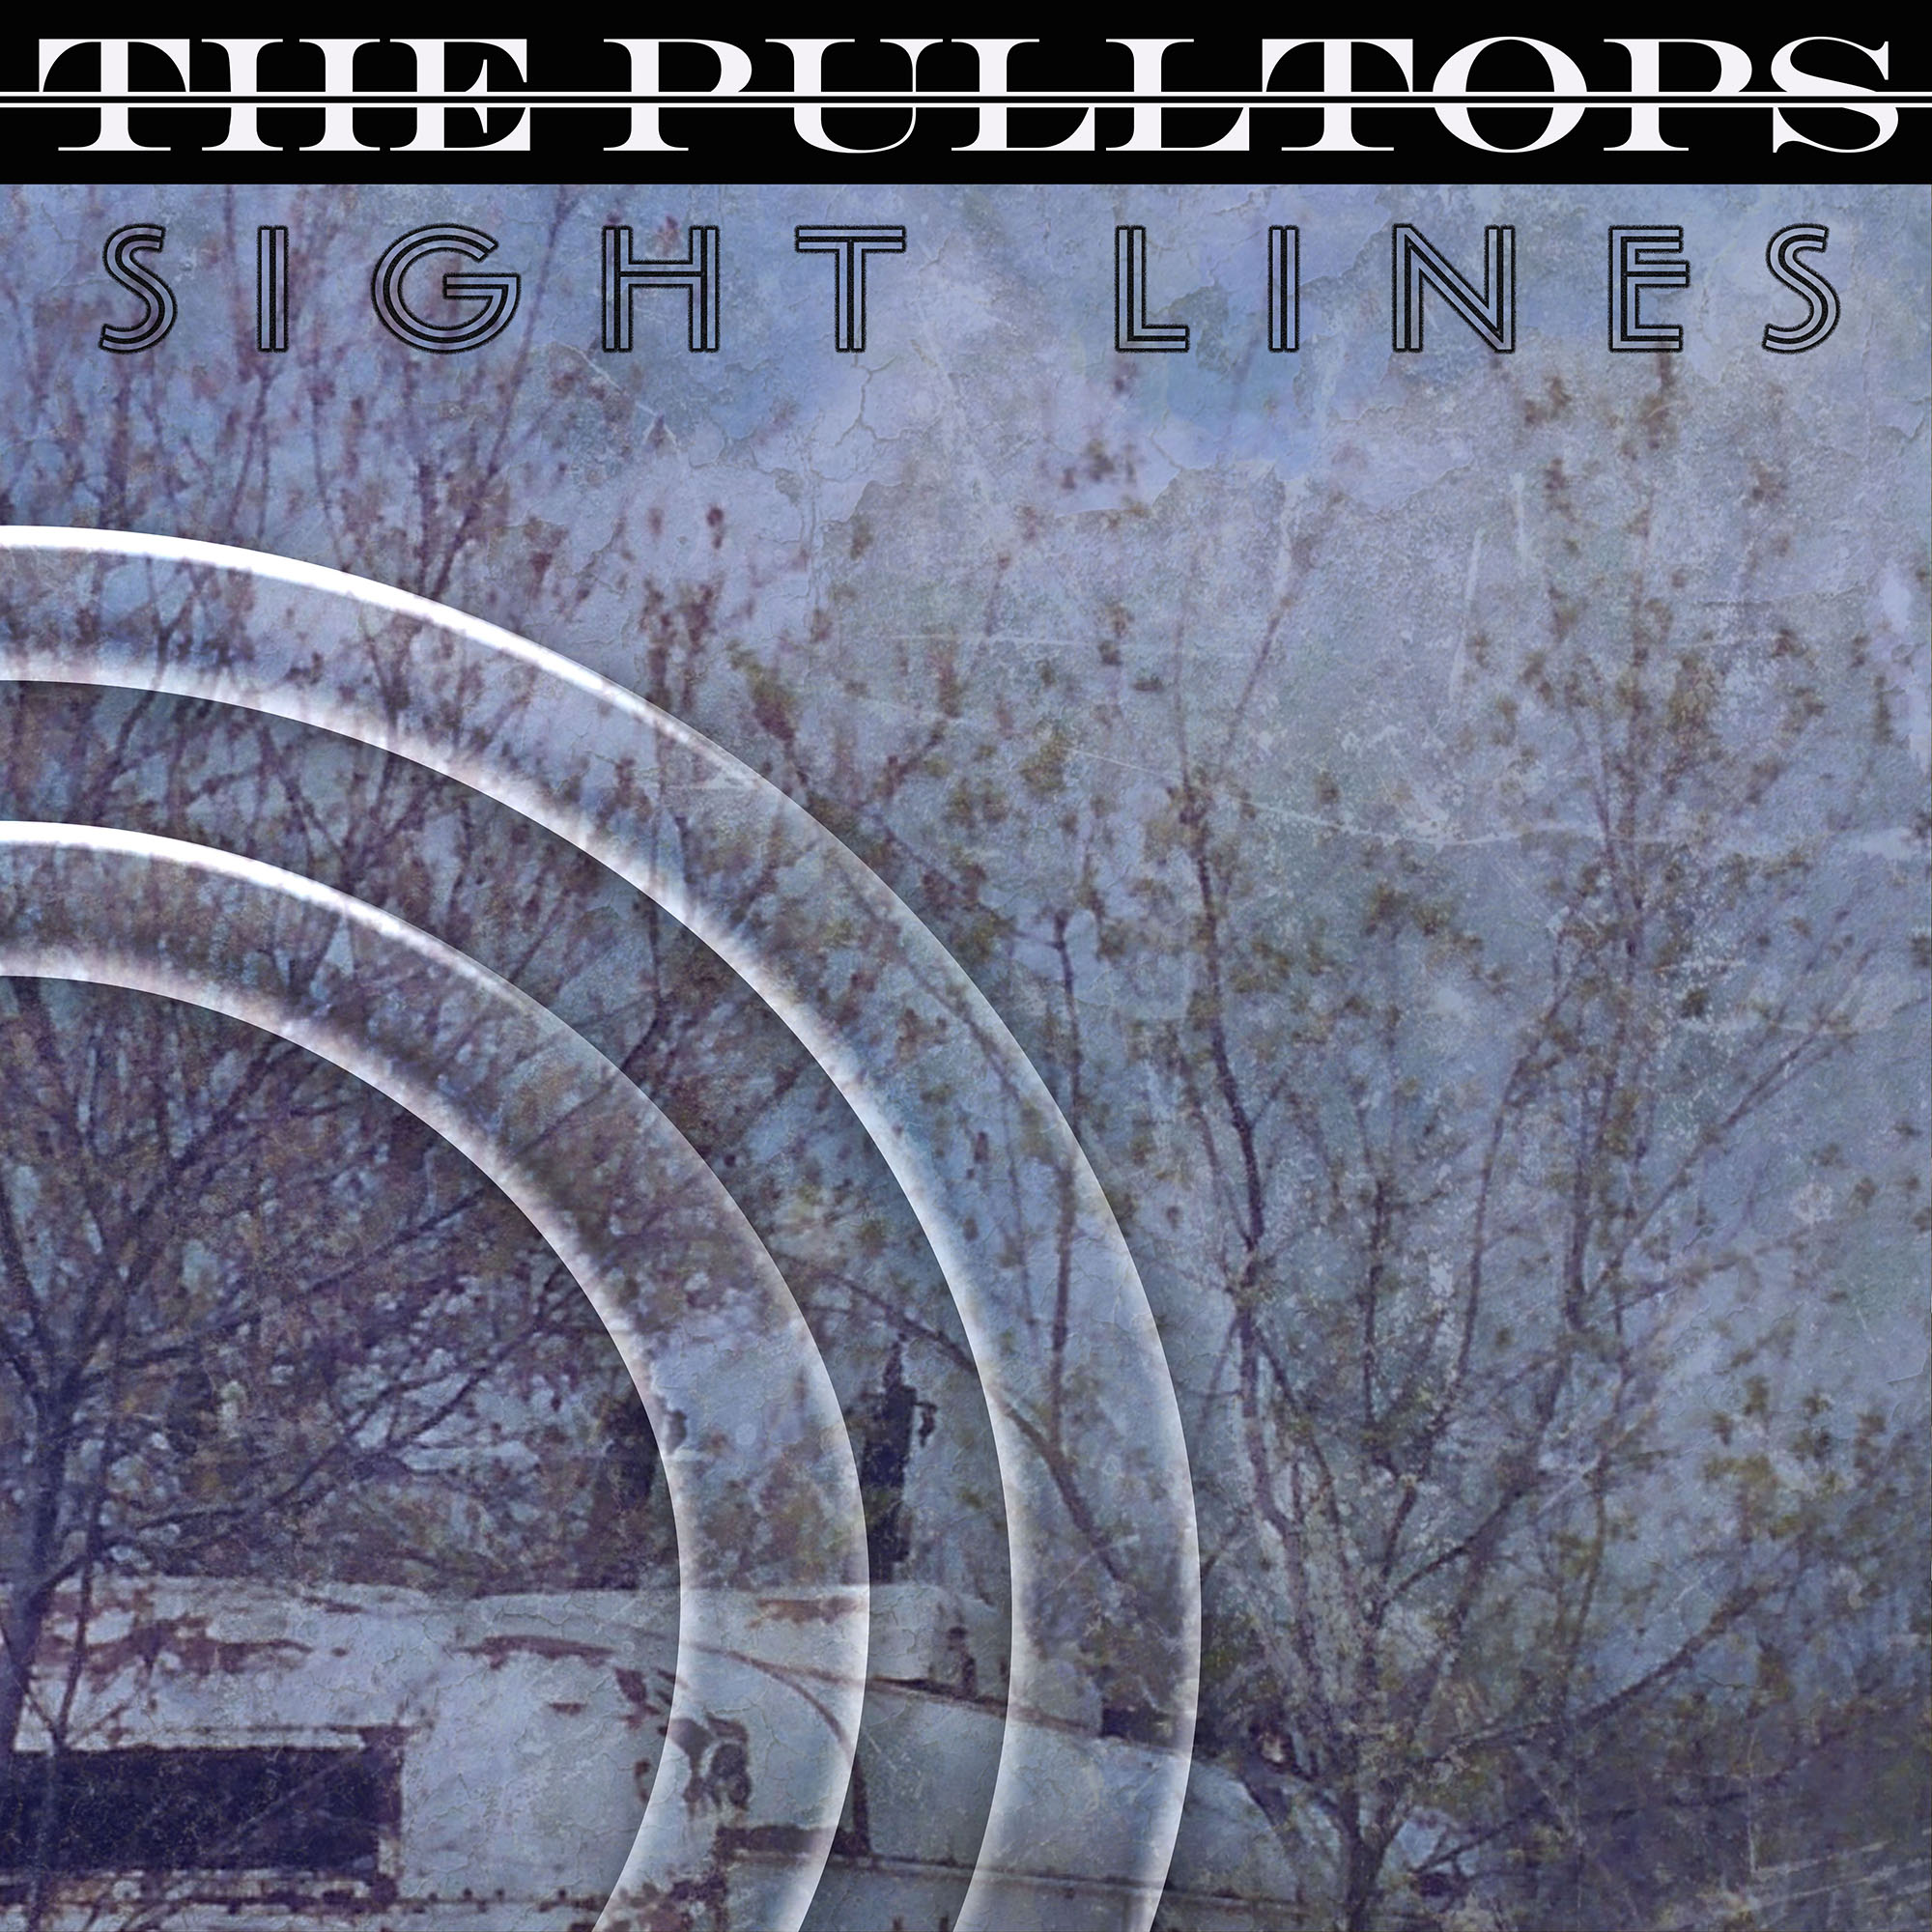  The Pulltops reinventan “Have You Ever Seen The Rain?” en su último EP